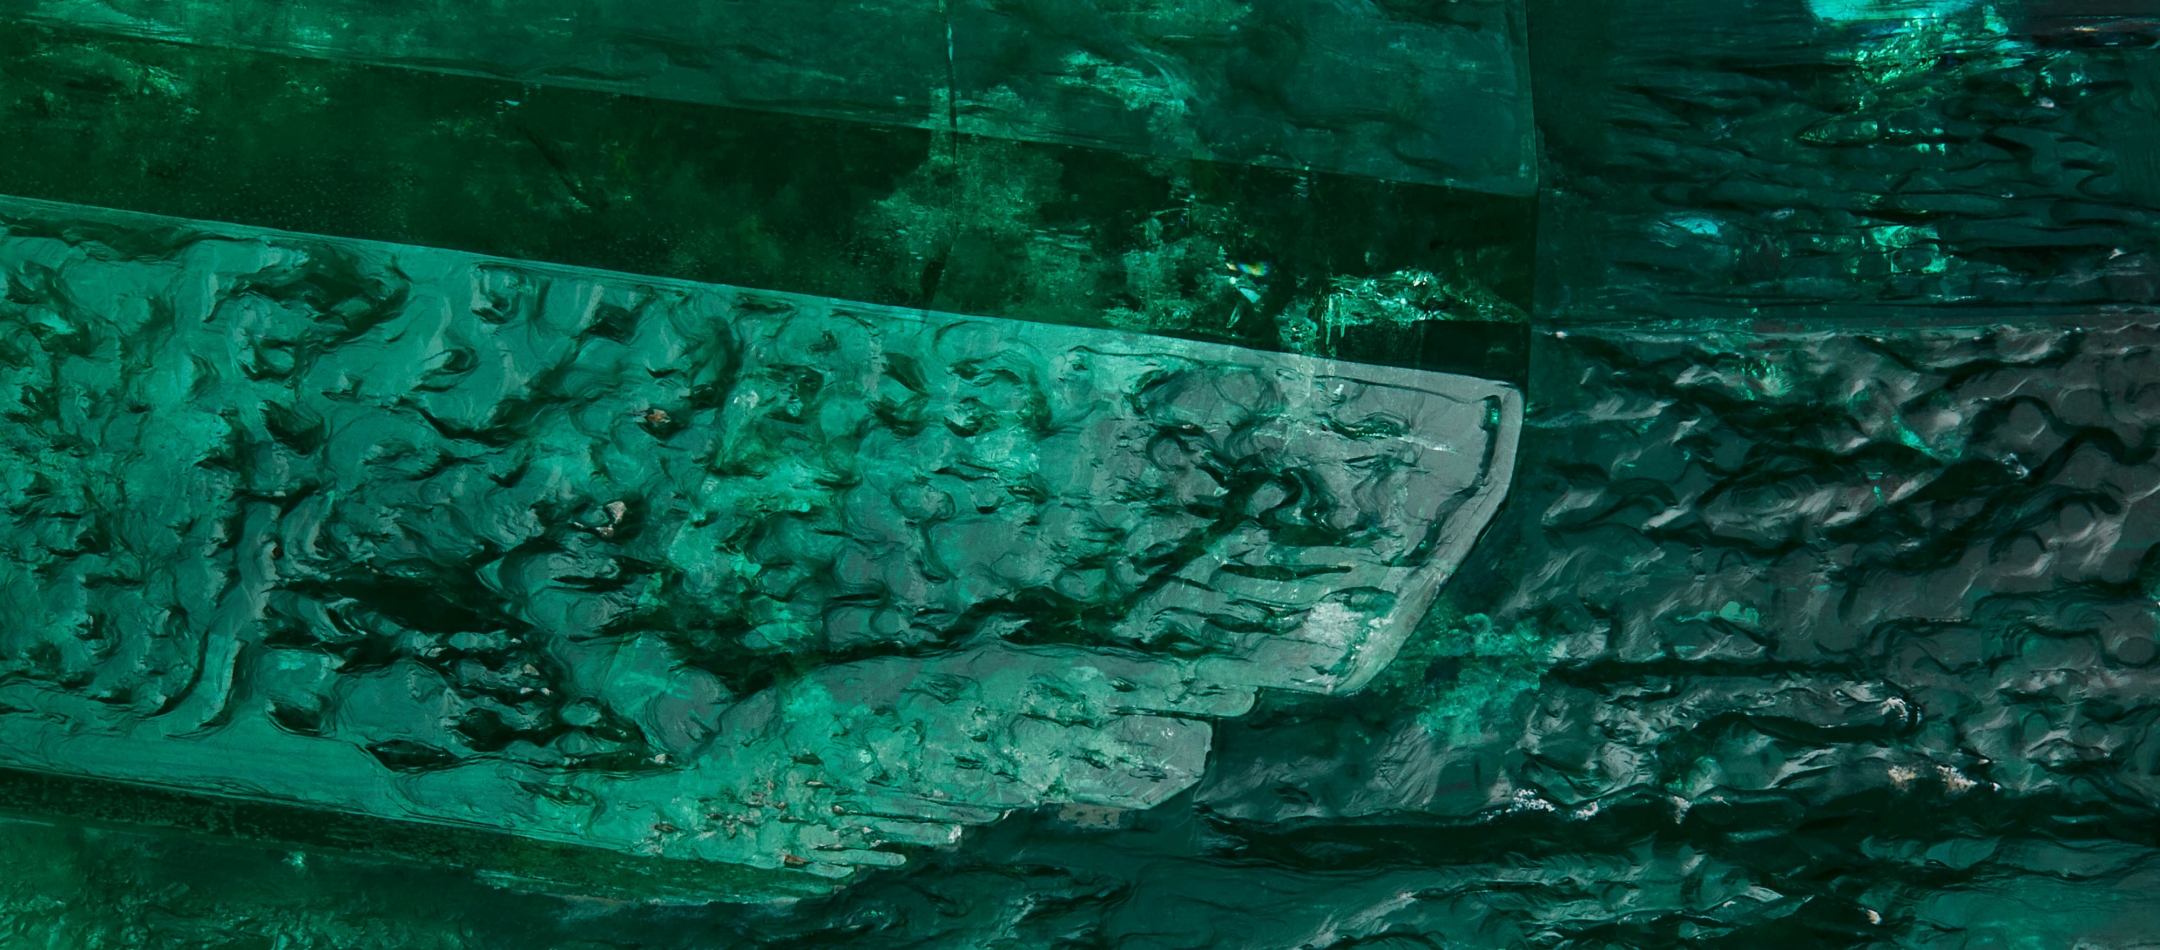 Emerald Detail Highlighting Surface Texture